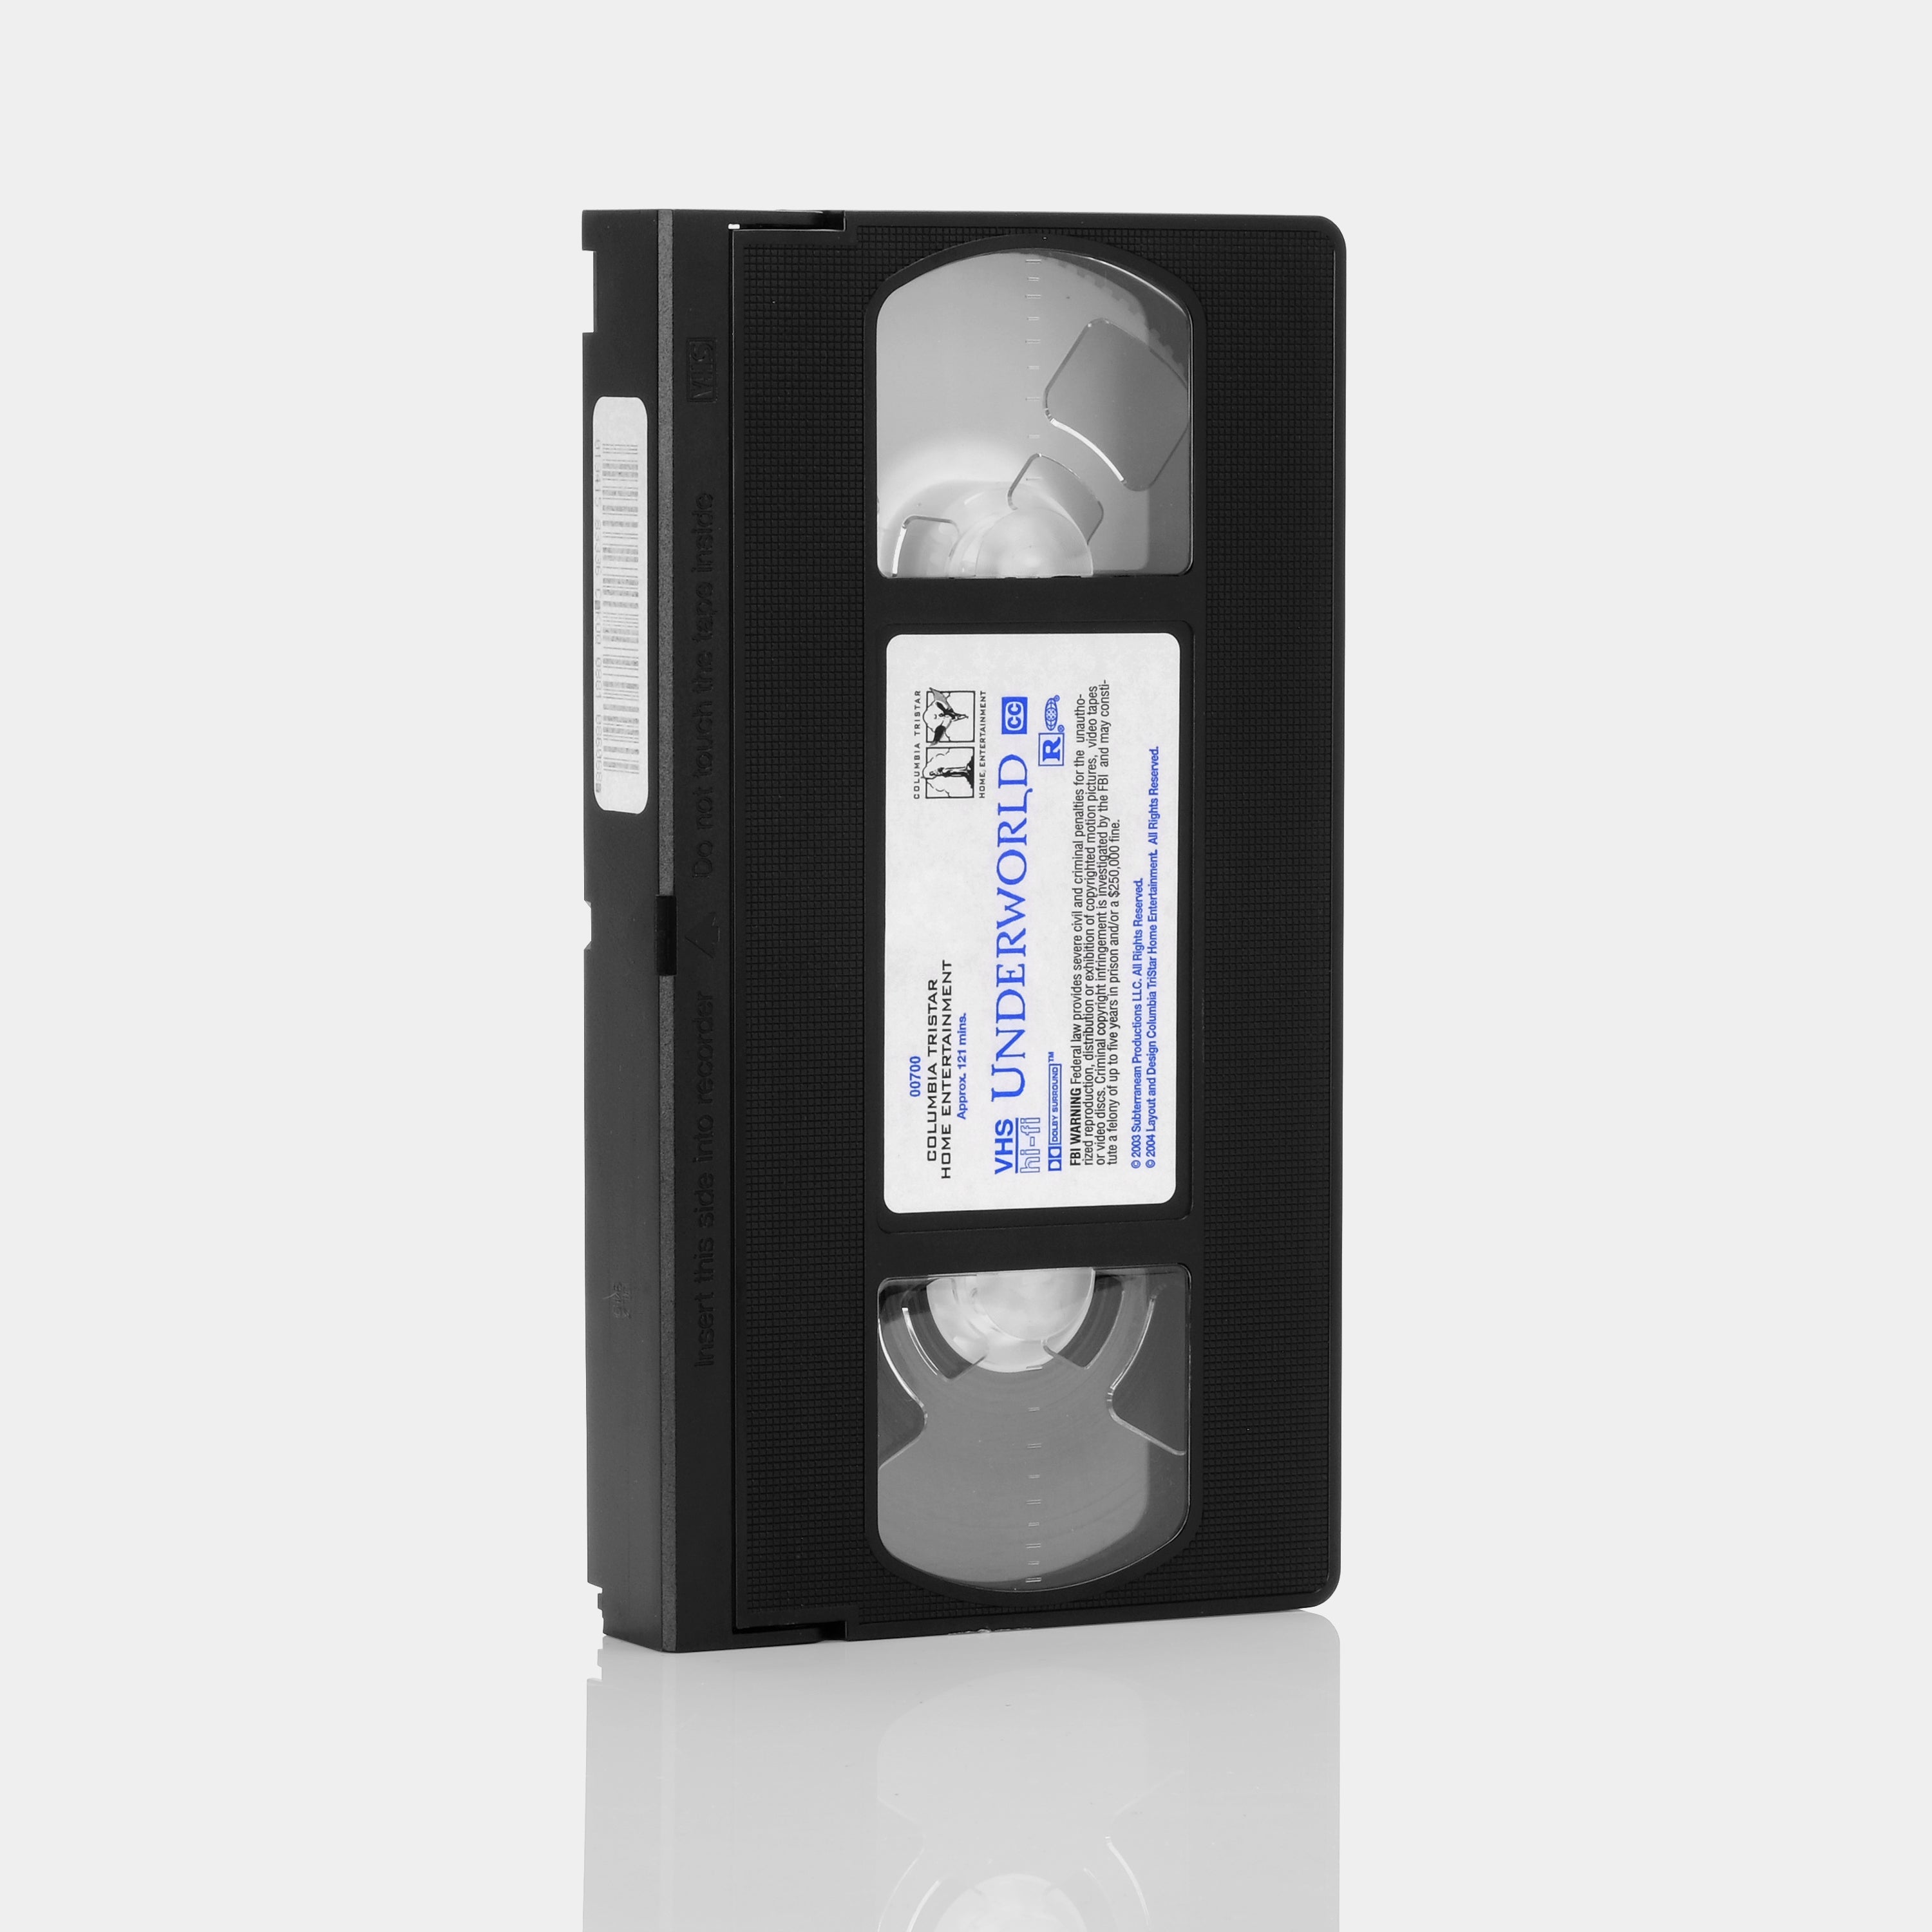 Underworld VHS Tape